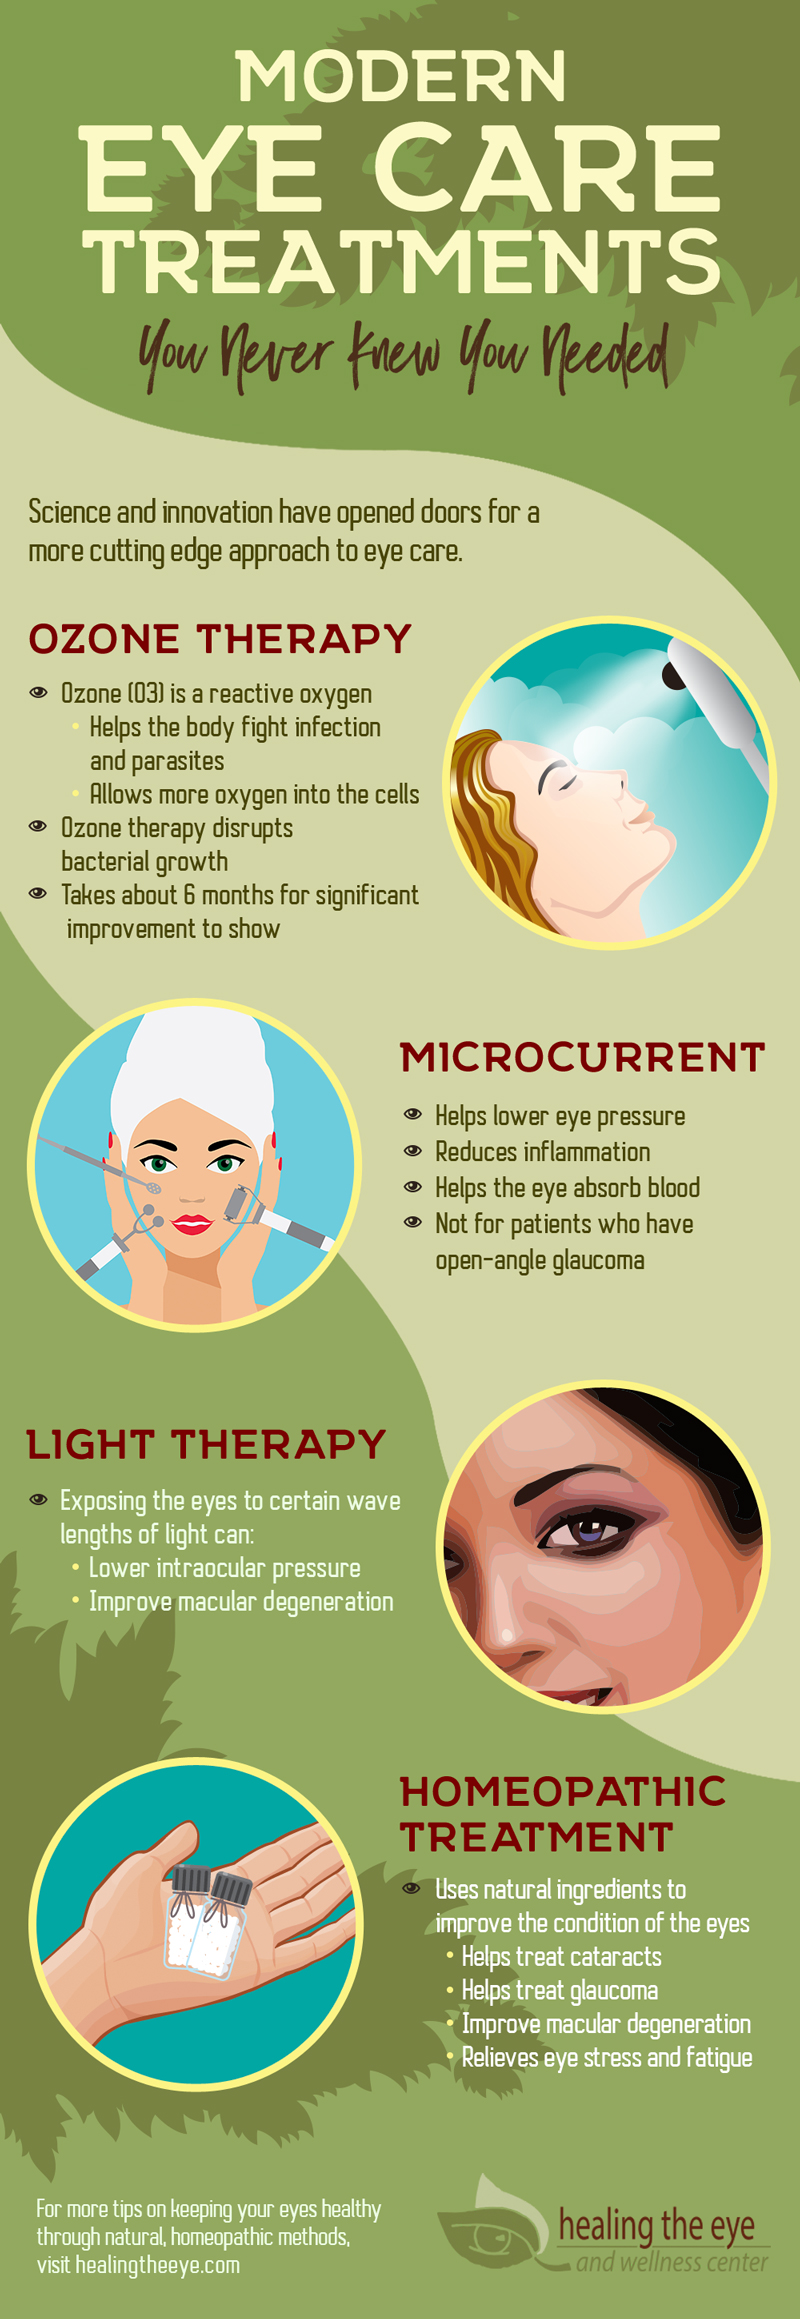 Modern Eye Care Treatments | Healing The Eye | Eye Care Treatments for a Healthy Vision